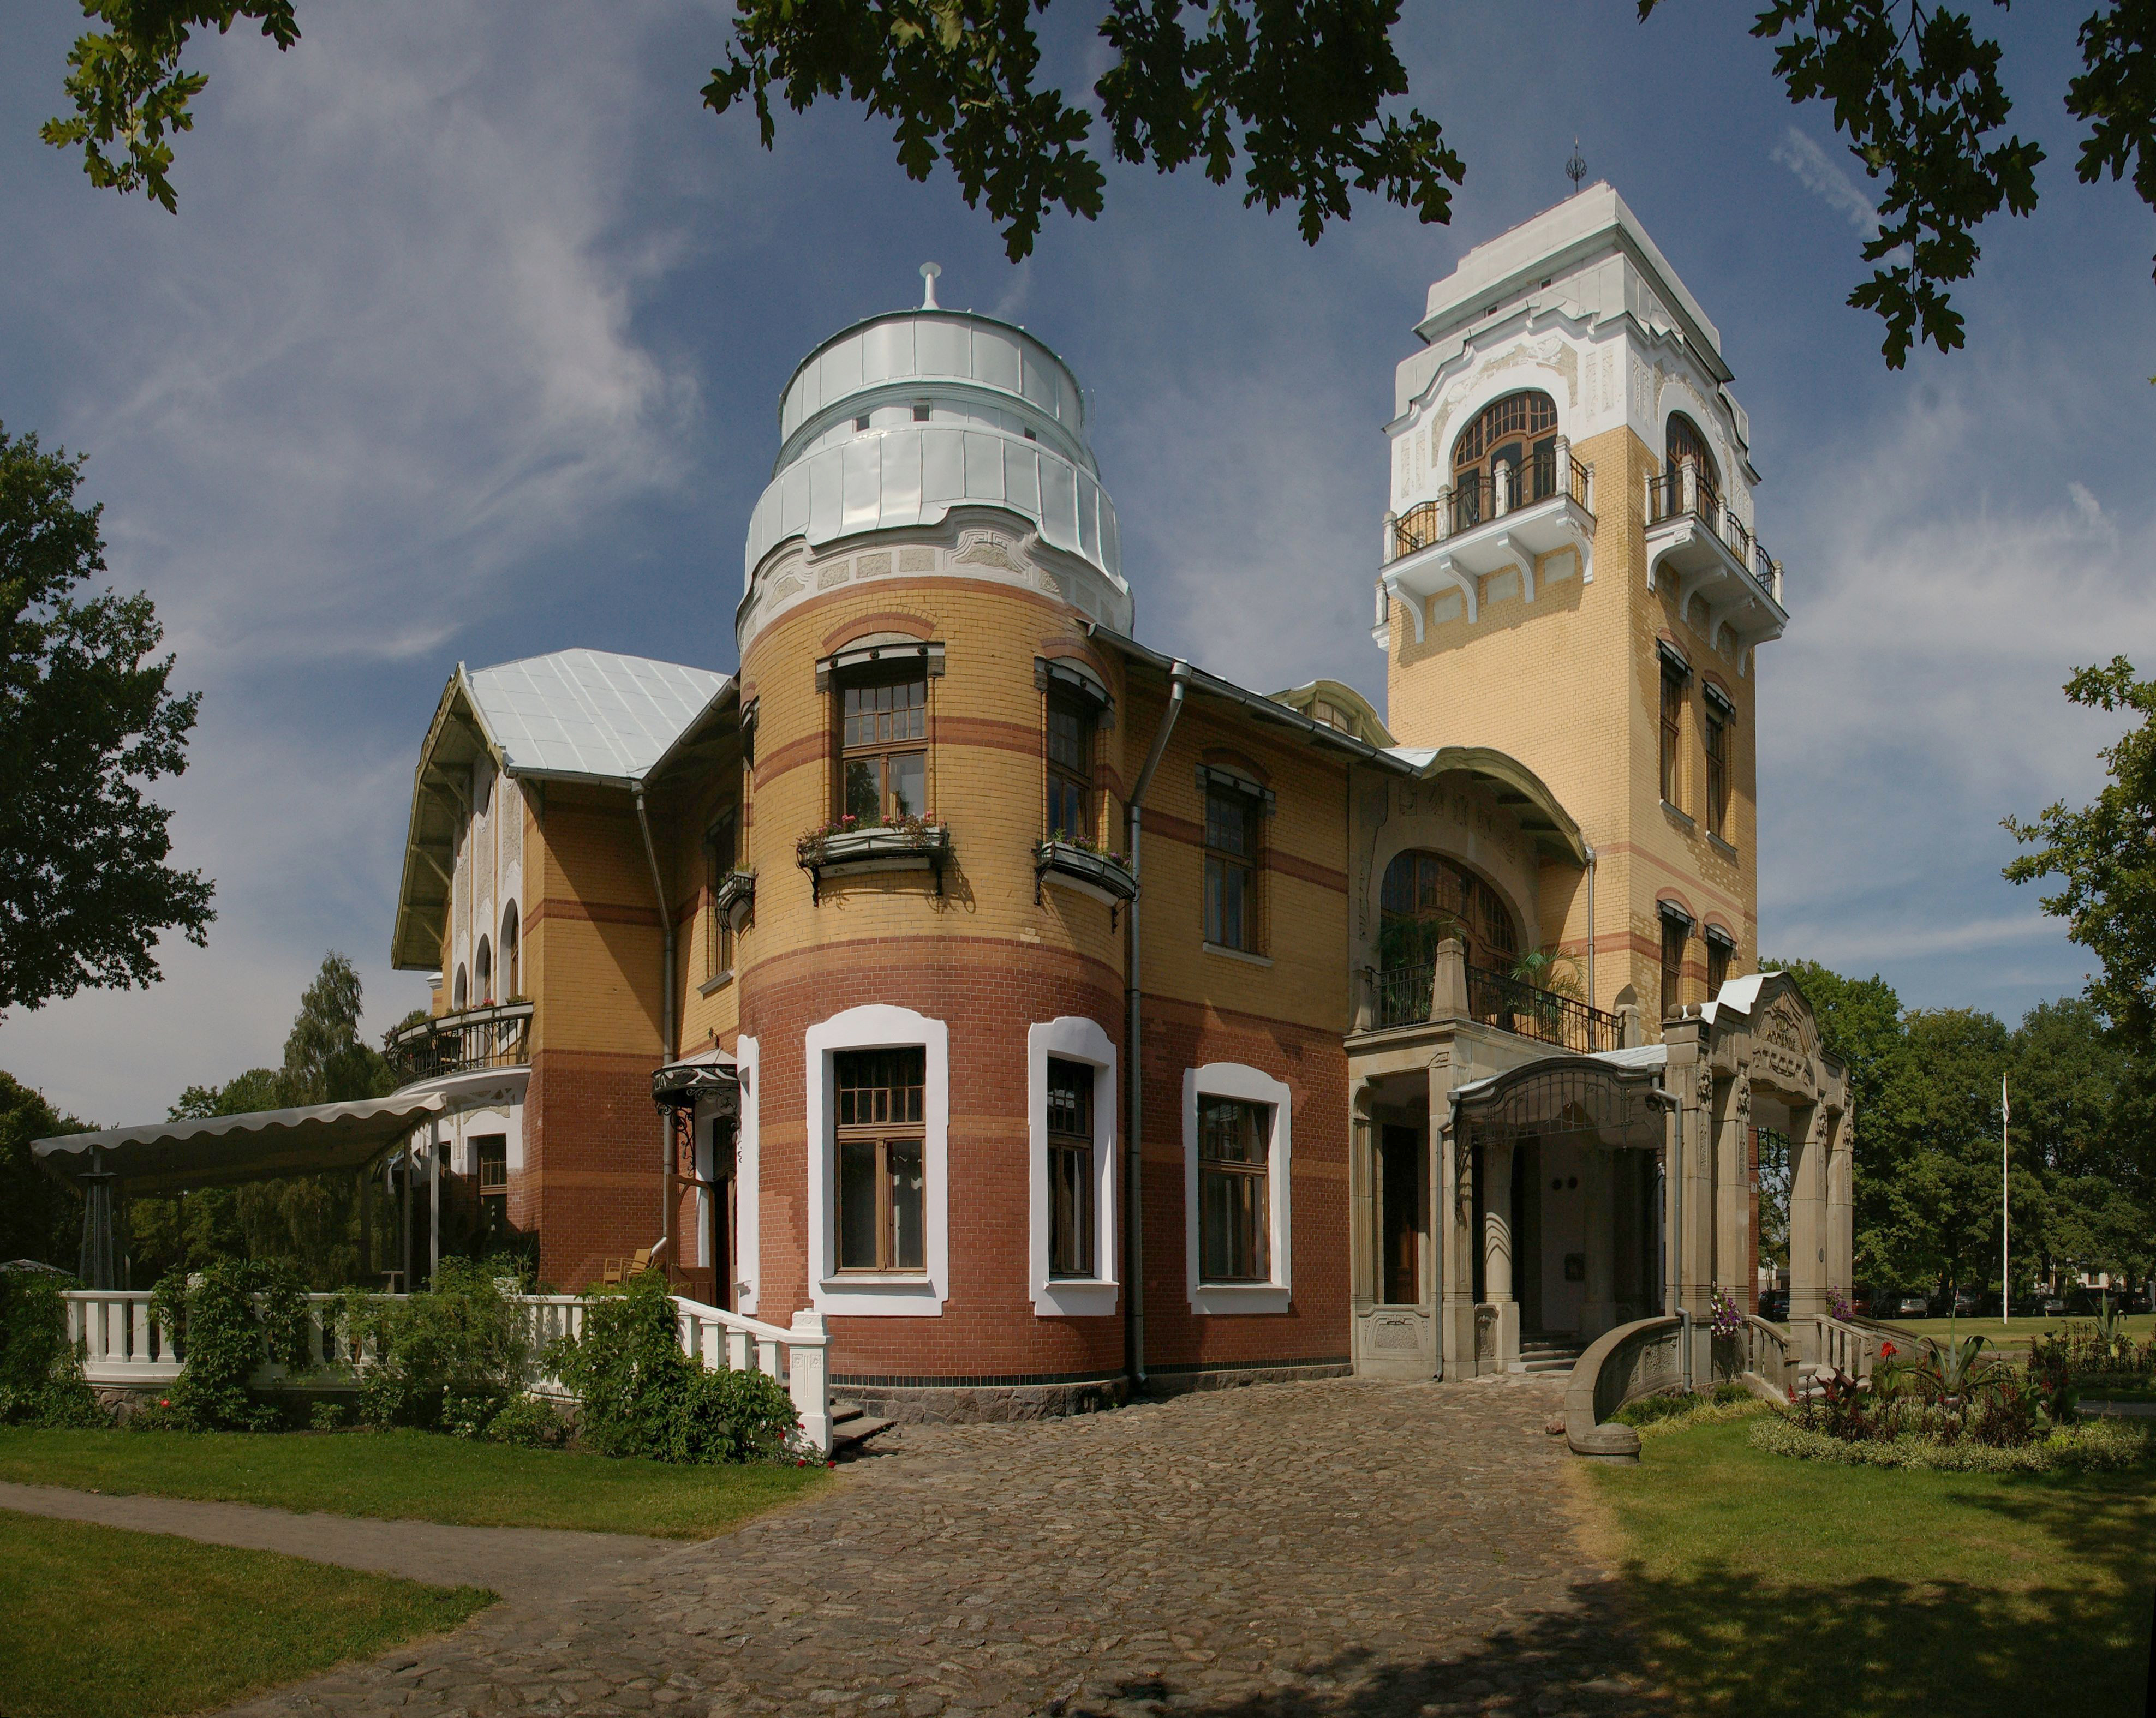 Ammende villa 2 - 2-storey luxury villa belonging to Hermann Ammendele, Pärnu major, Best early youth style in Estonia